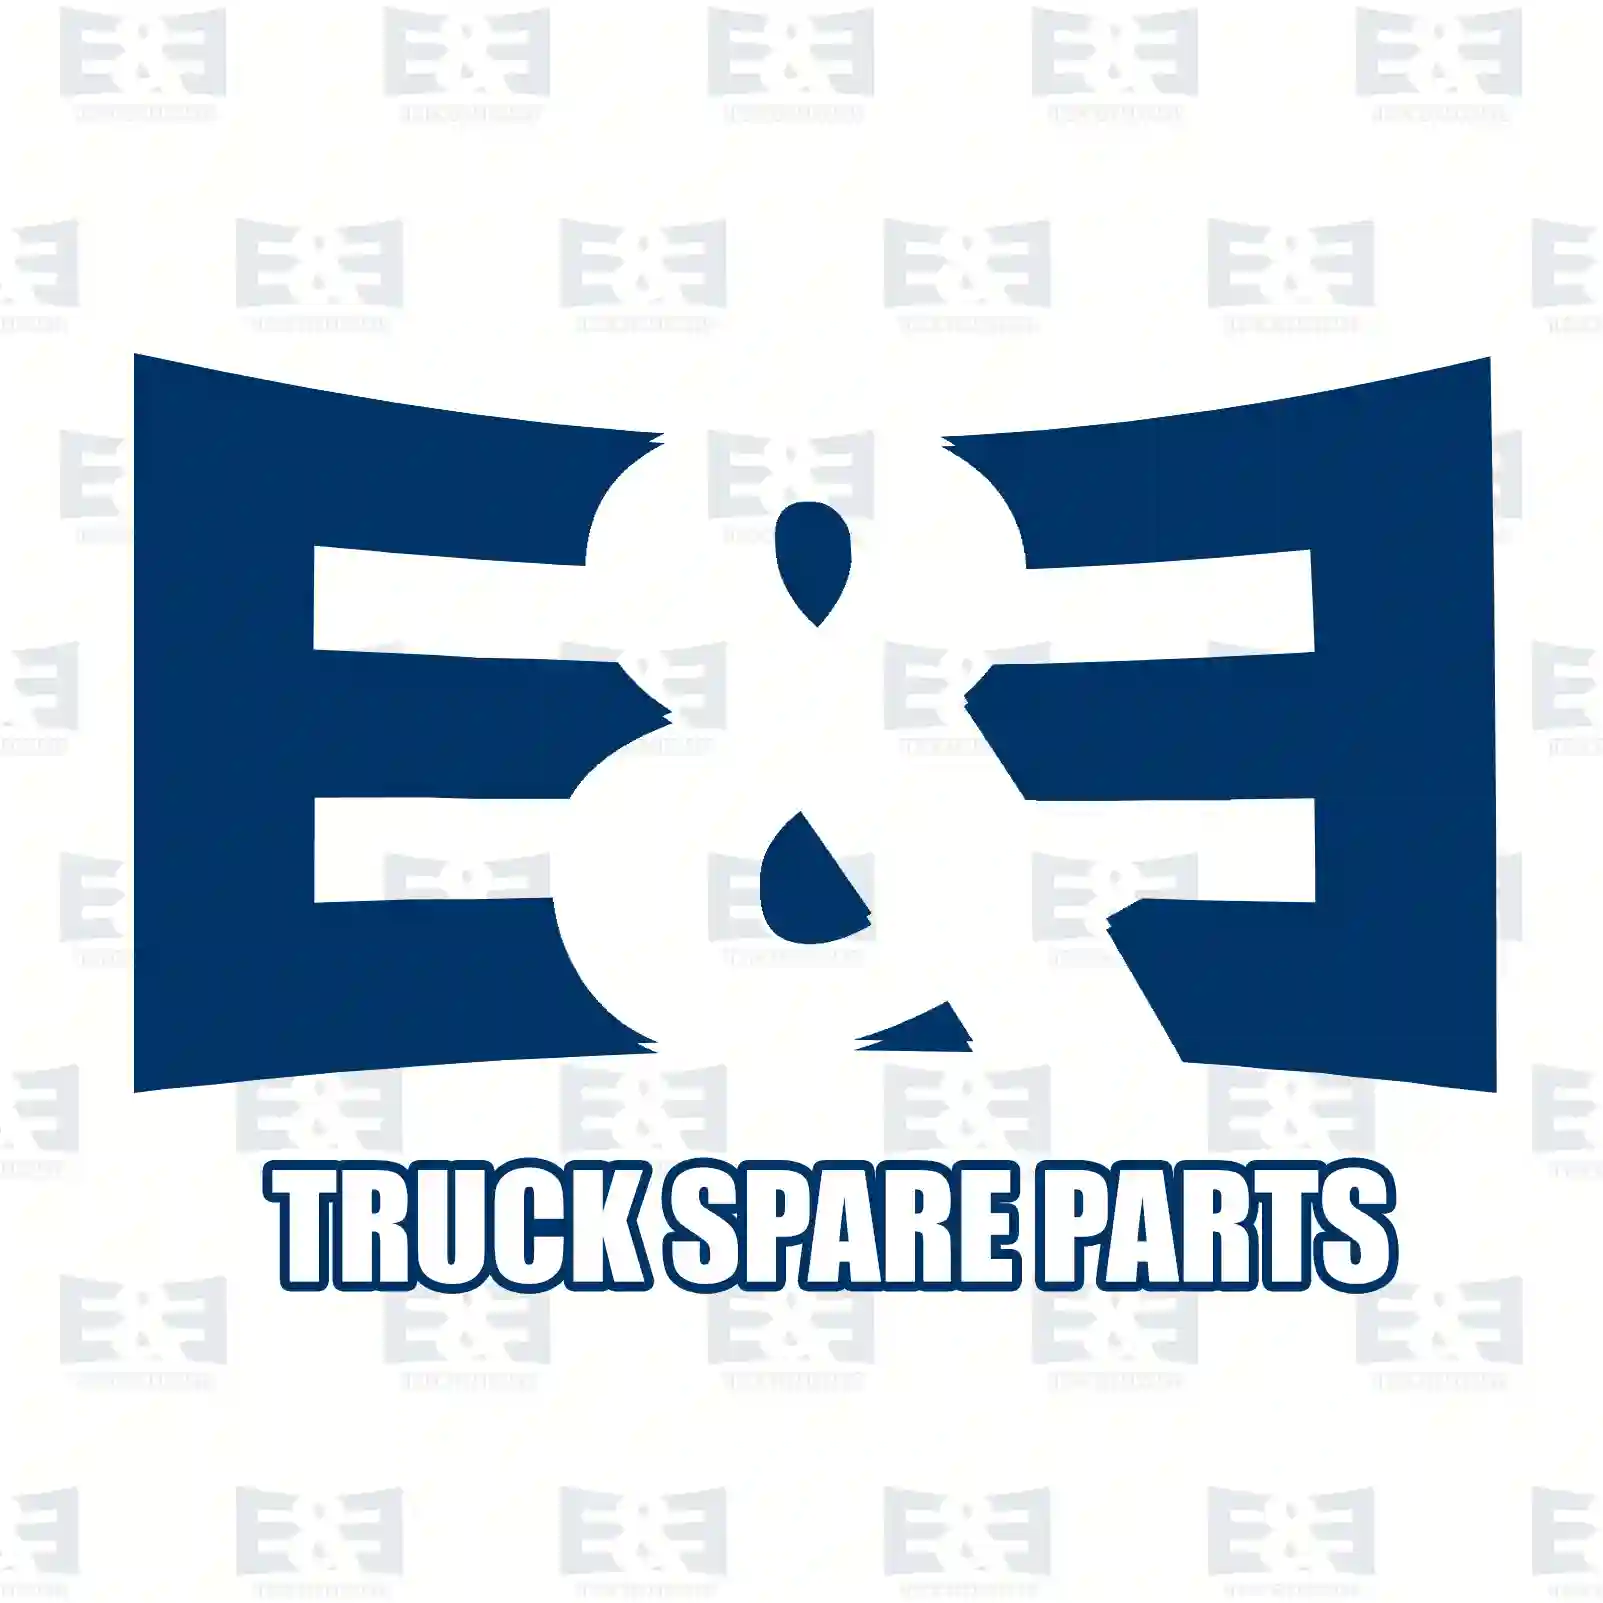 Hub Seal ring, EE No 2E2284032 ,  oem no:0331099020, 0331099150, , E&E Truck Spare Parts | Truck Spare Parts, Auotomotive Spare Parts